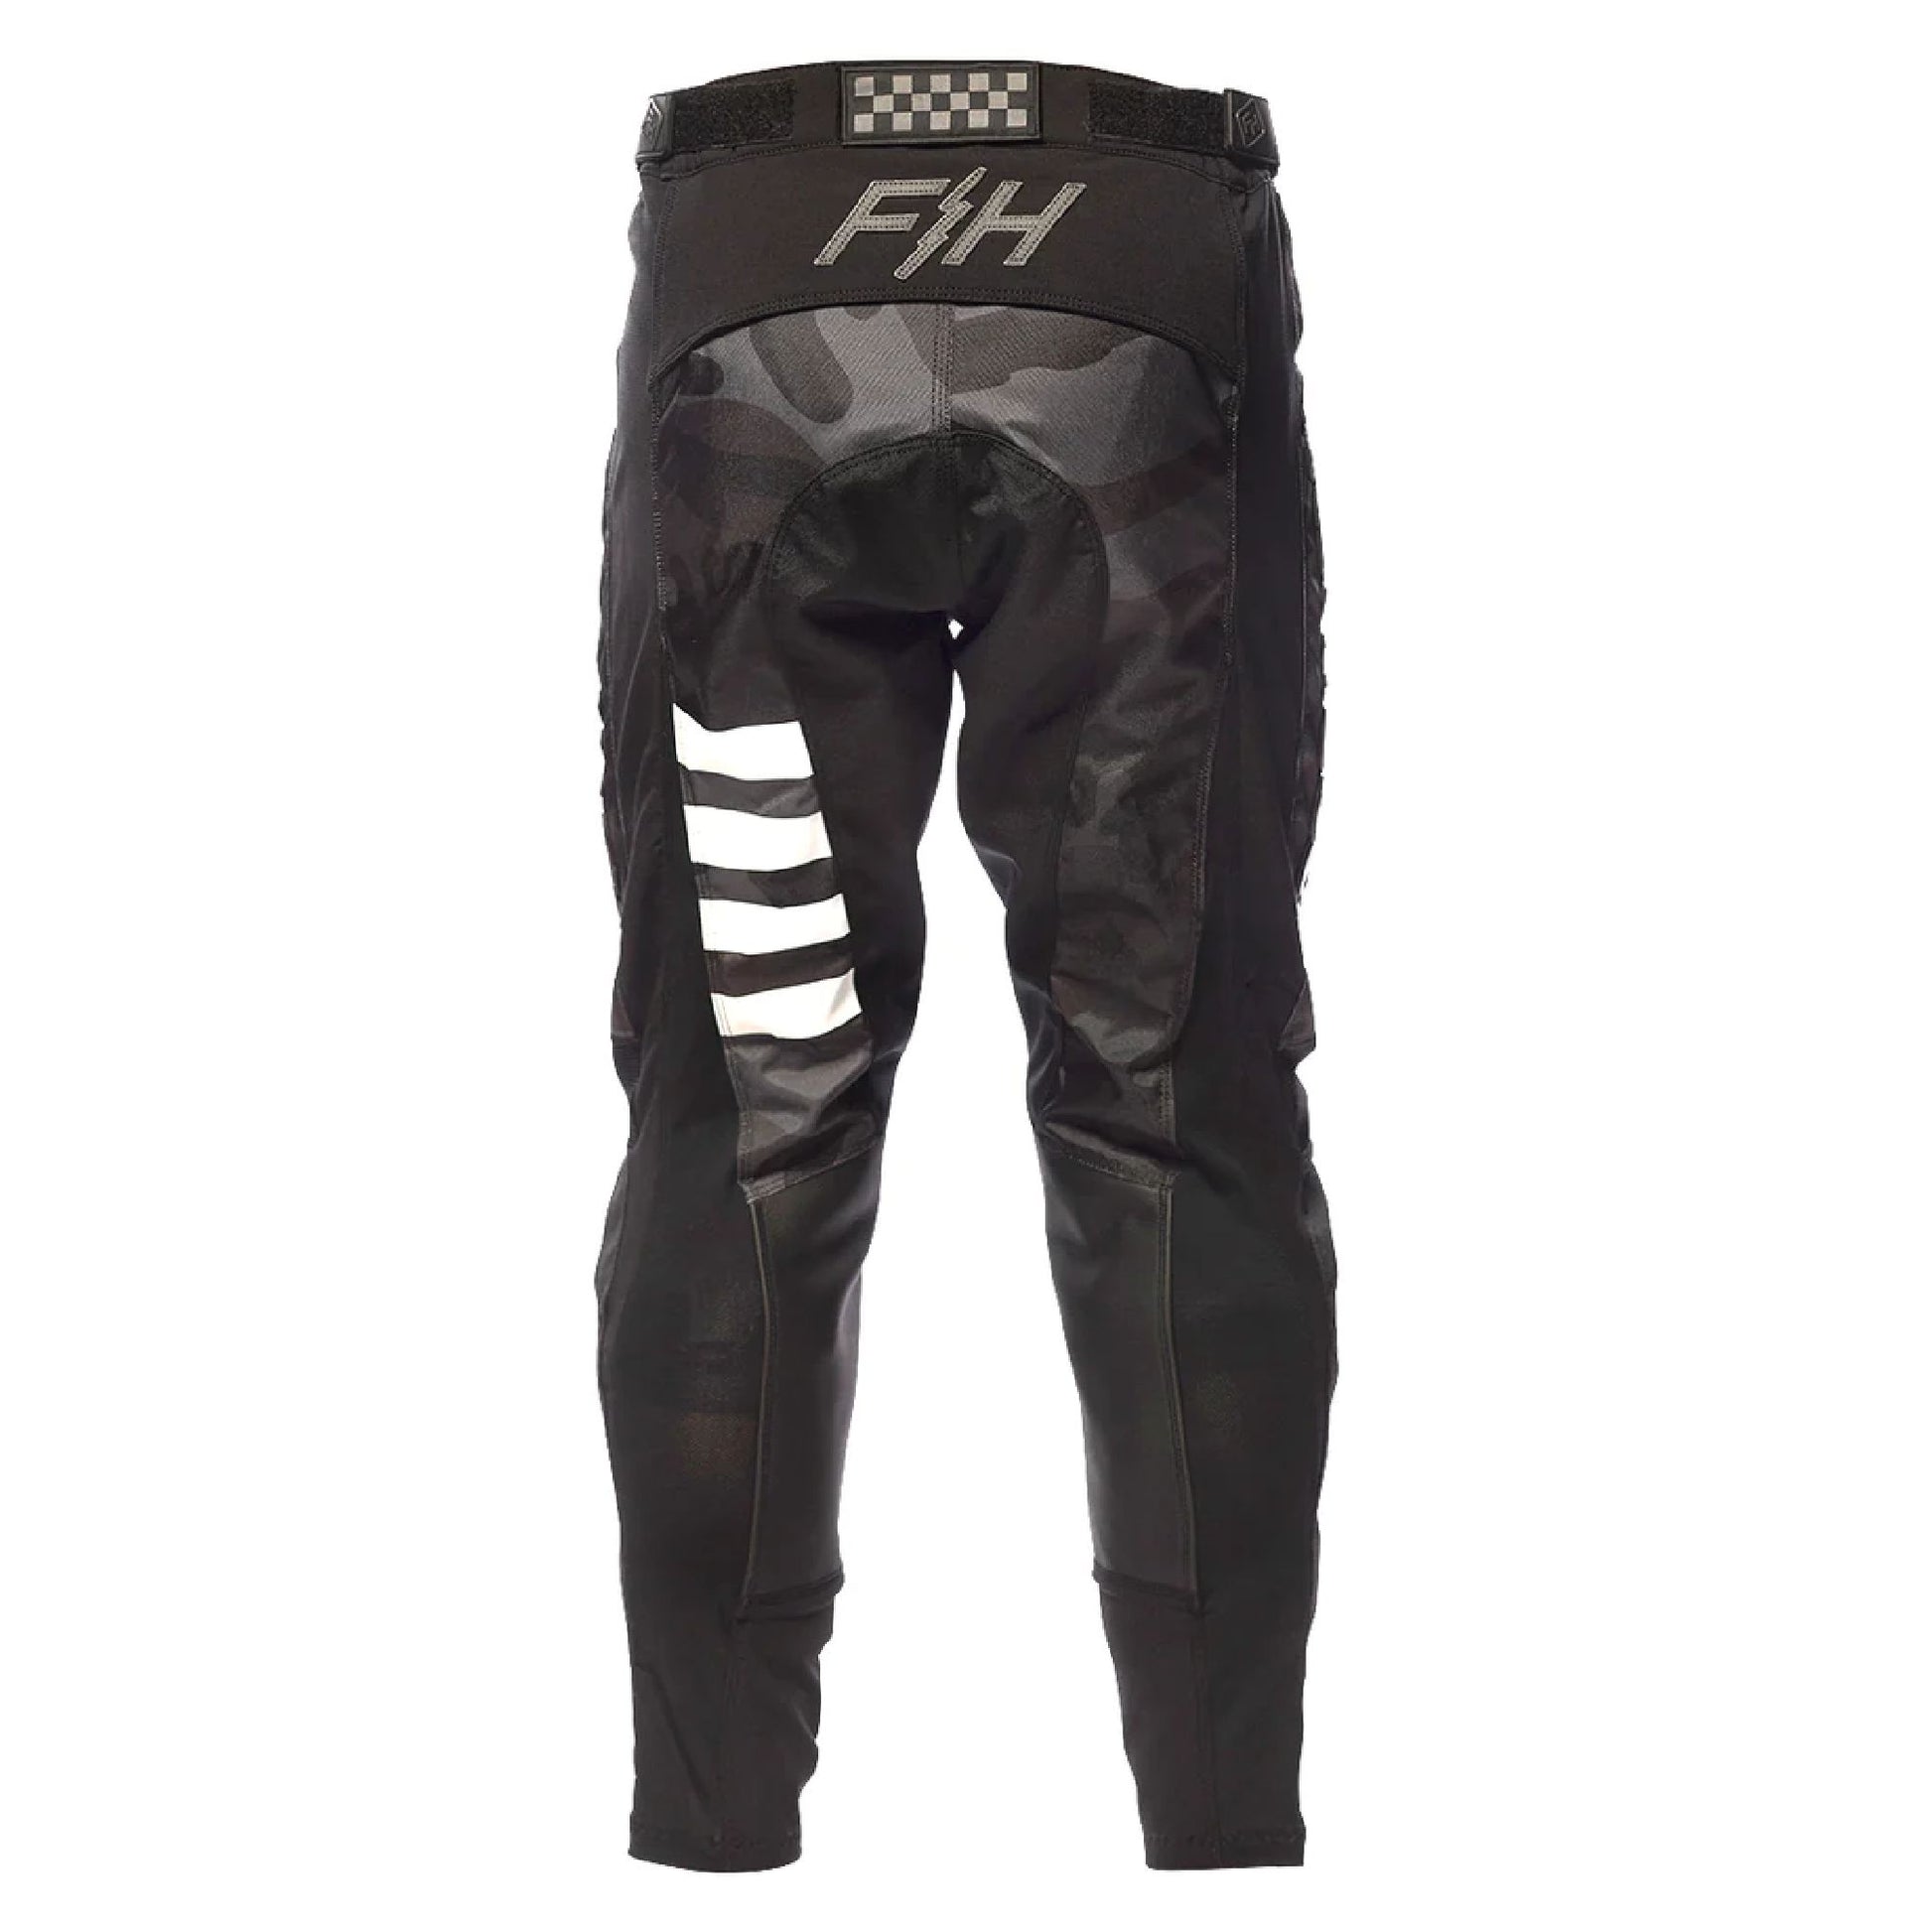 Fasthouse Grindhouse Pants Camo Black Bike Pants